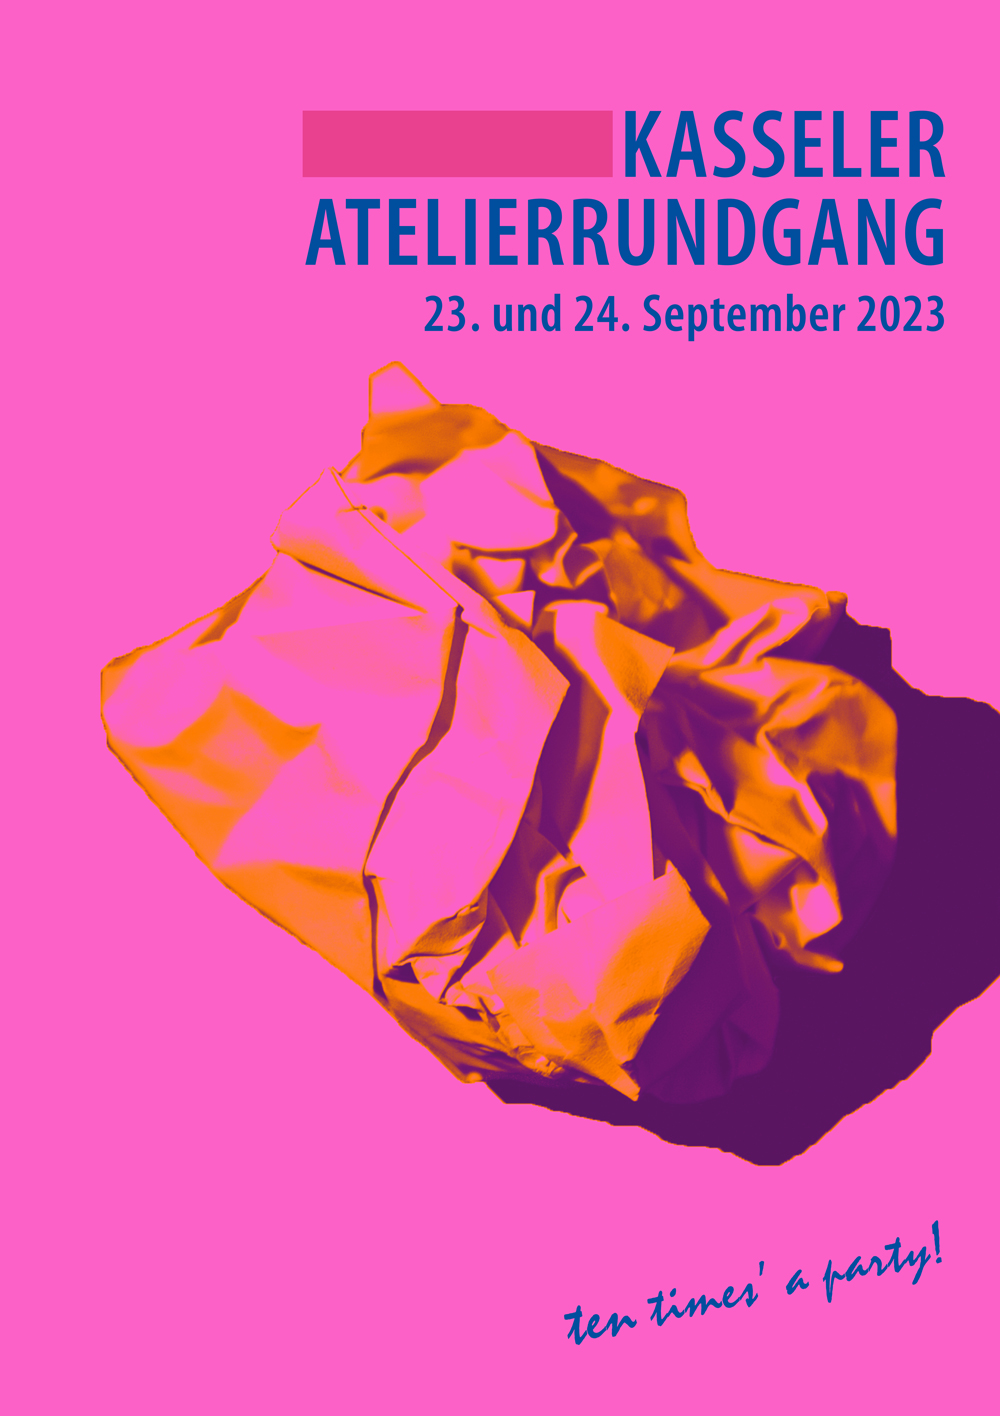 (c) Atelierrundgang.net